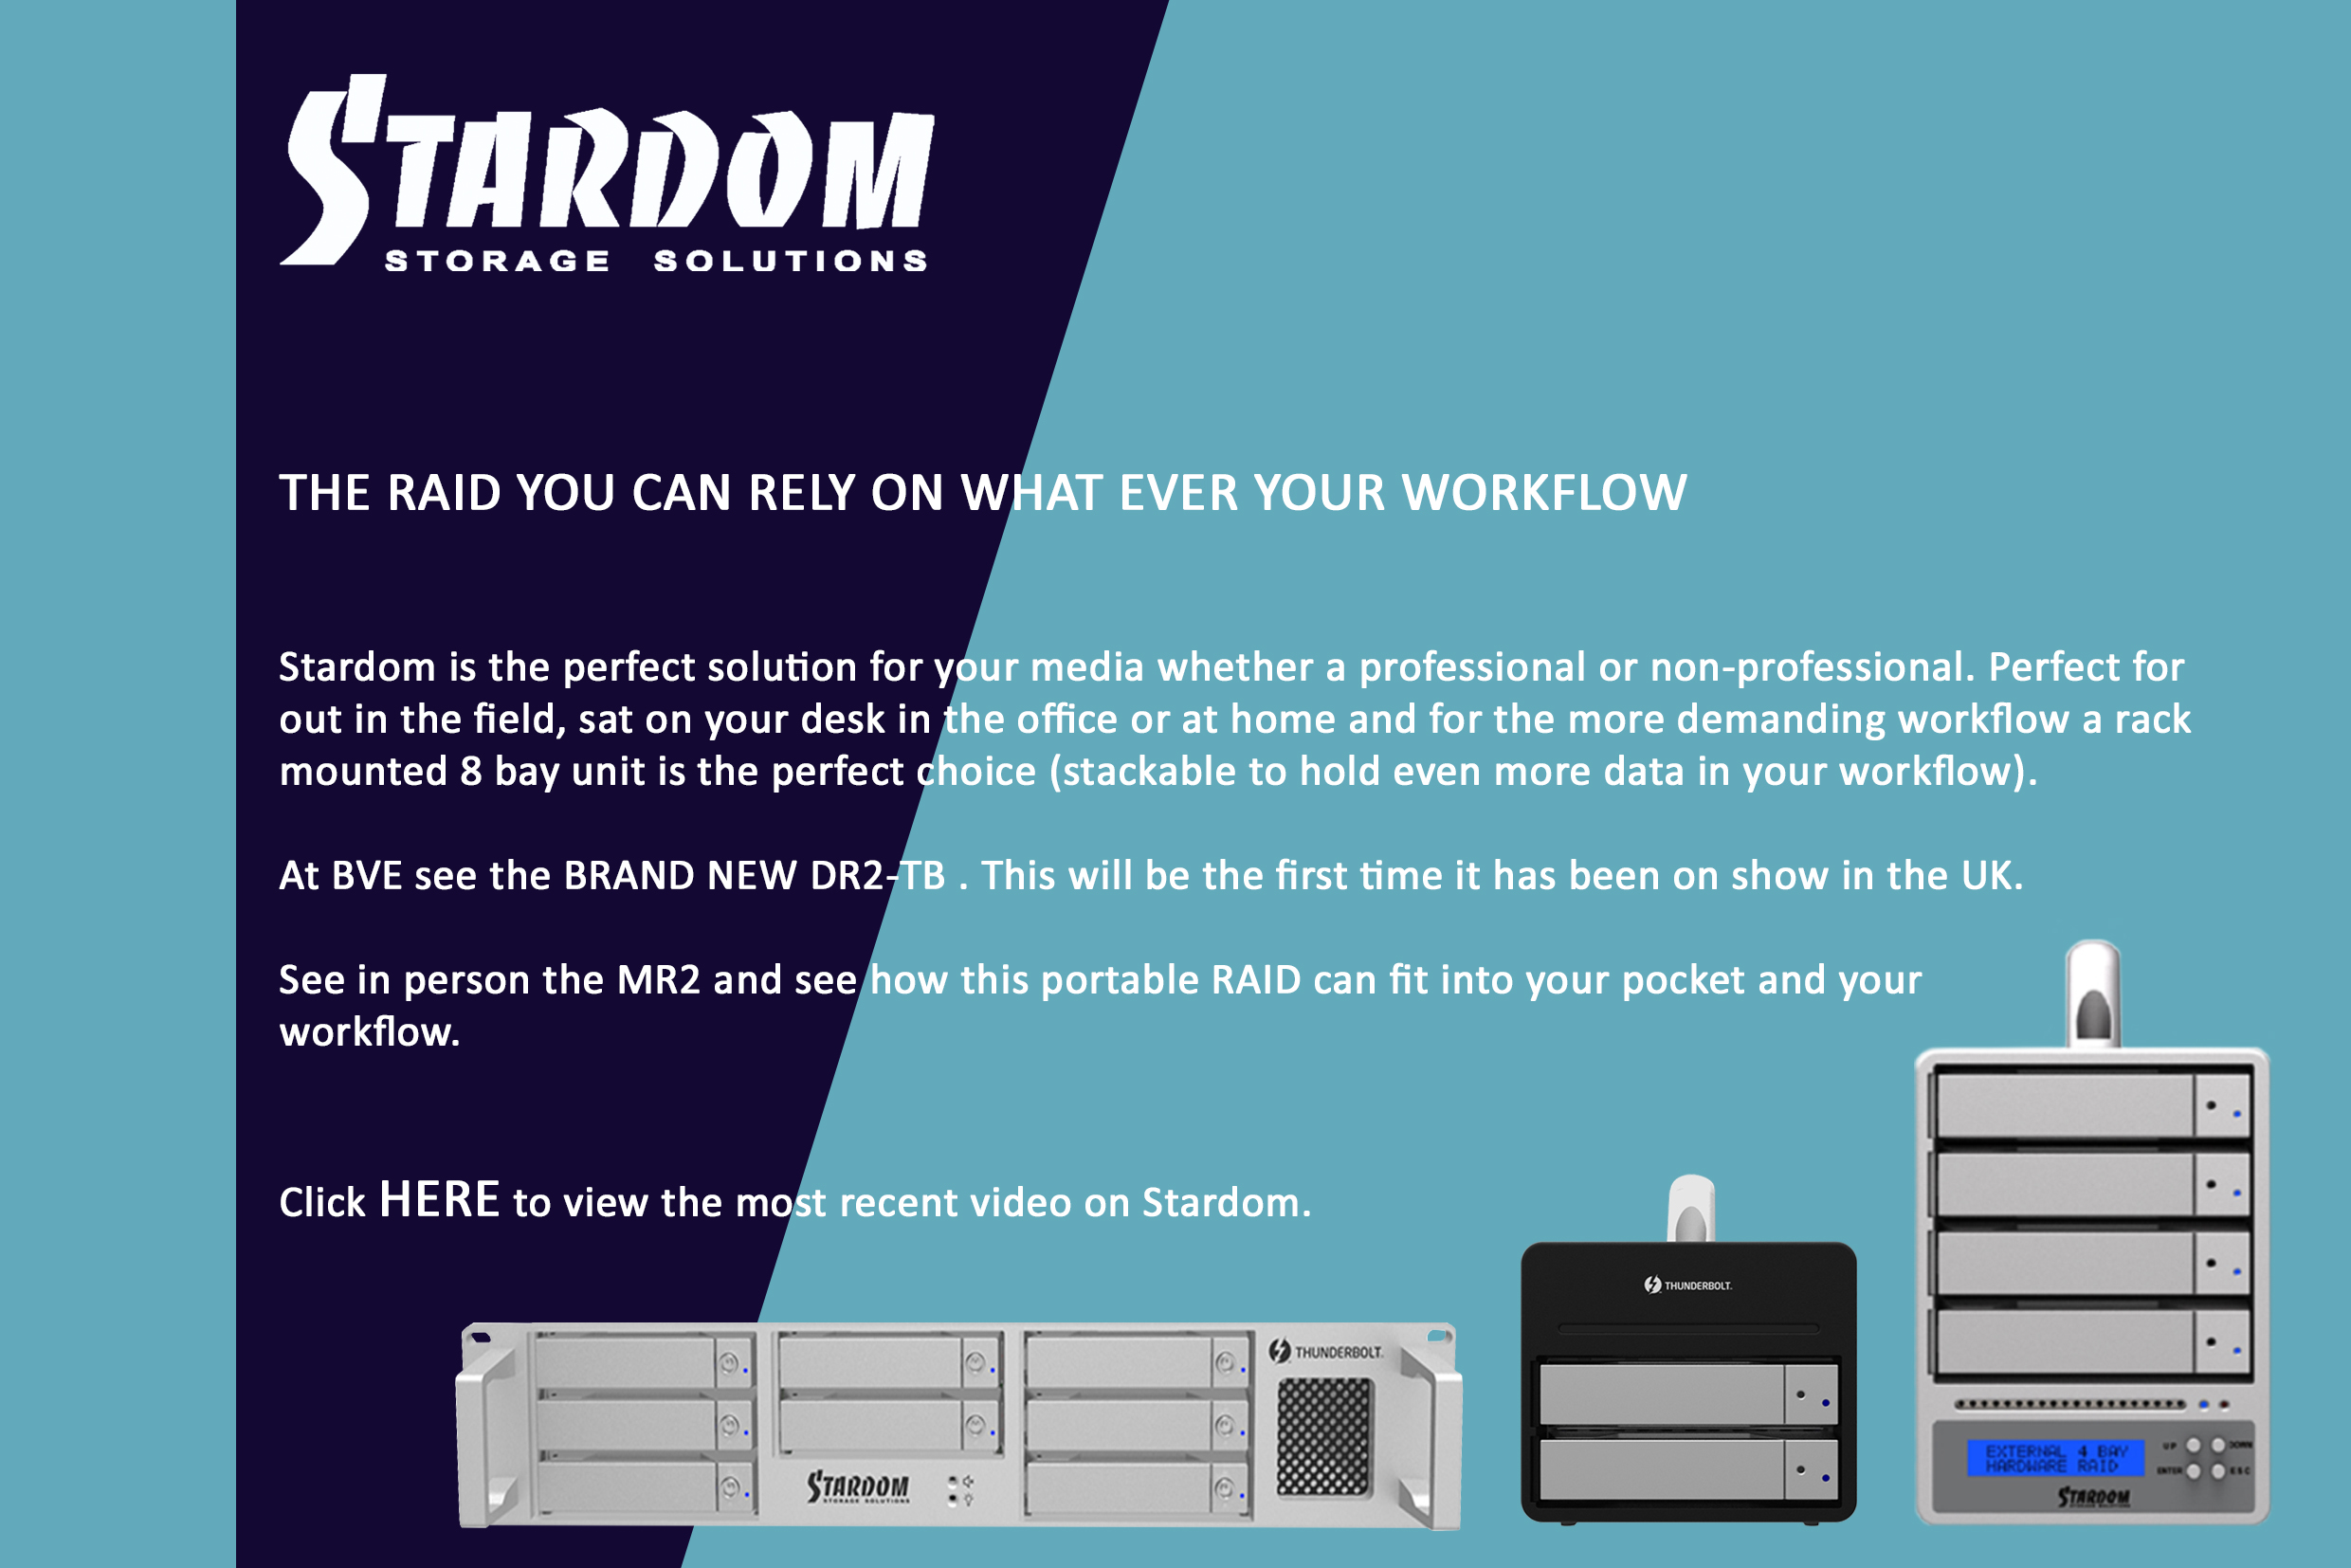  Plan Your Visit for BVE 2017: Stardom_RAID Storage Solutions